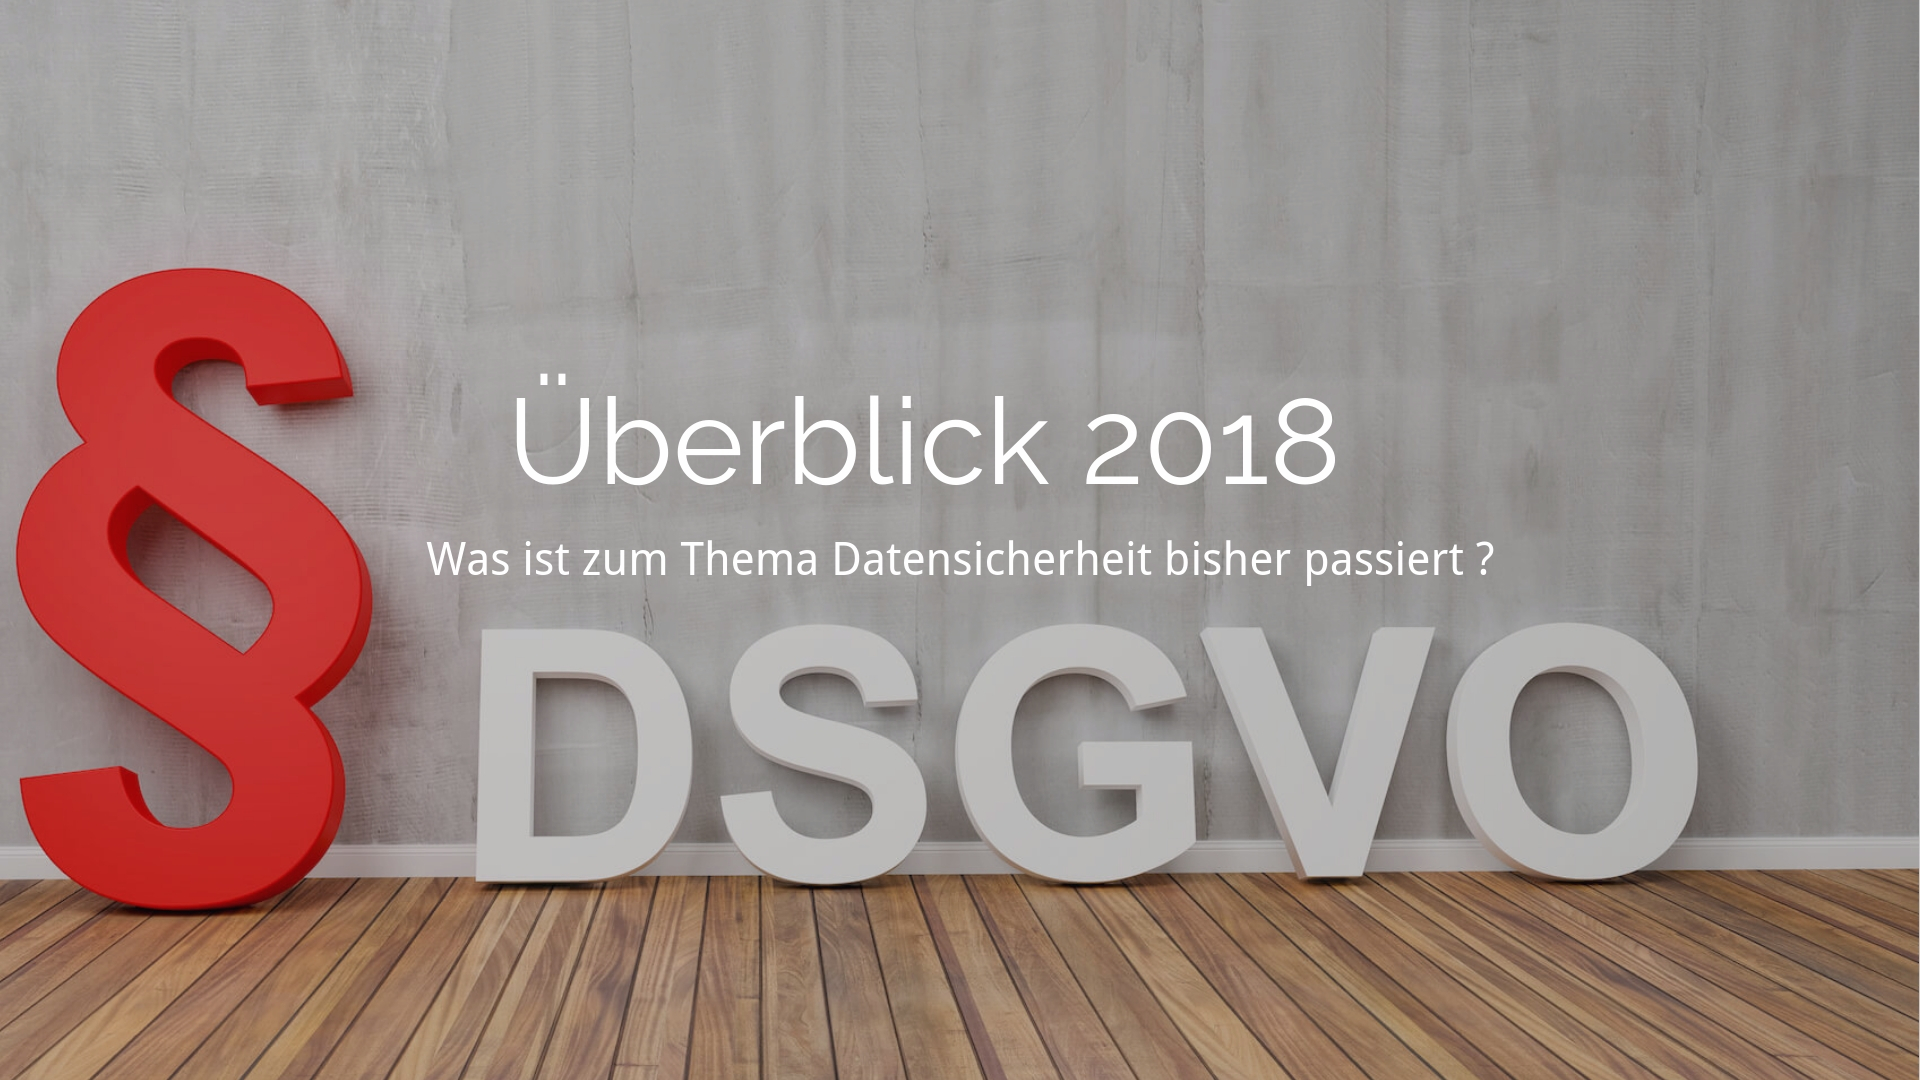 DSGVO Ueberblick 2018